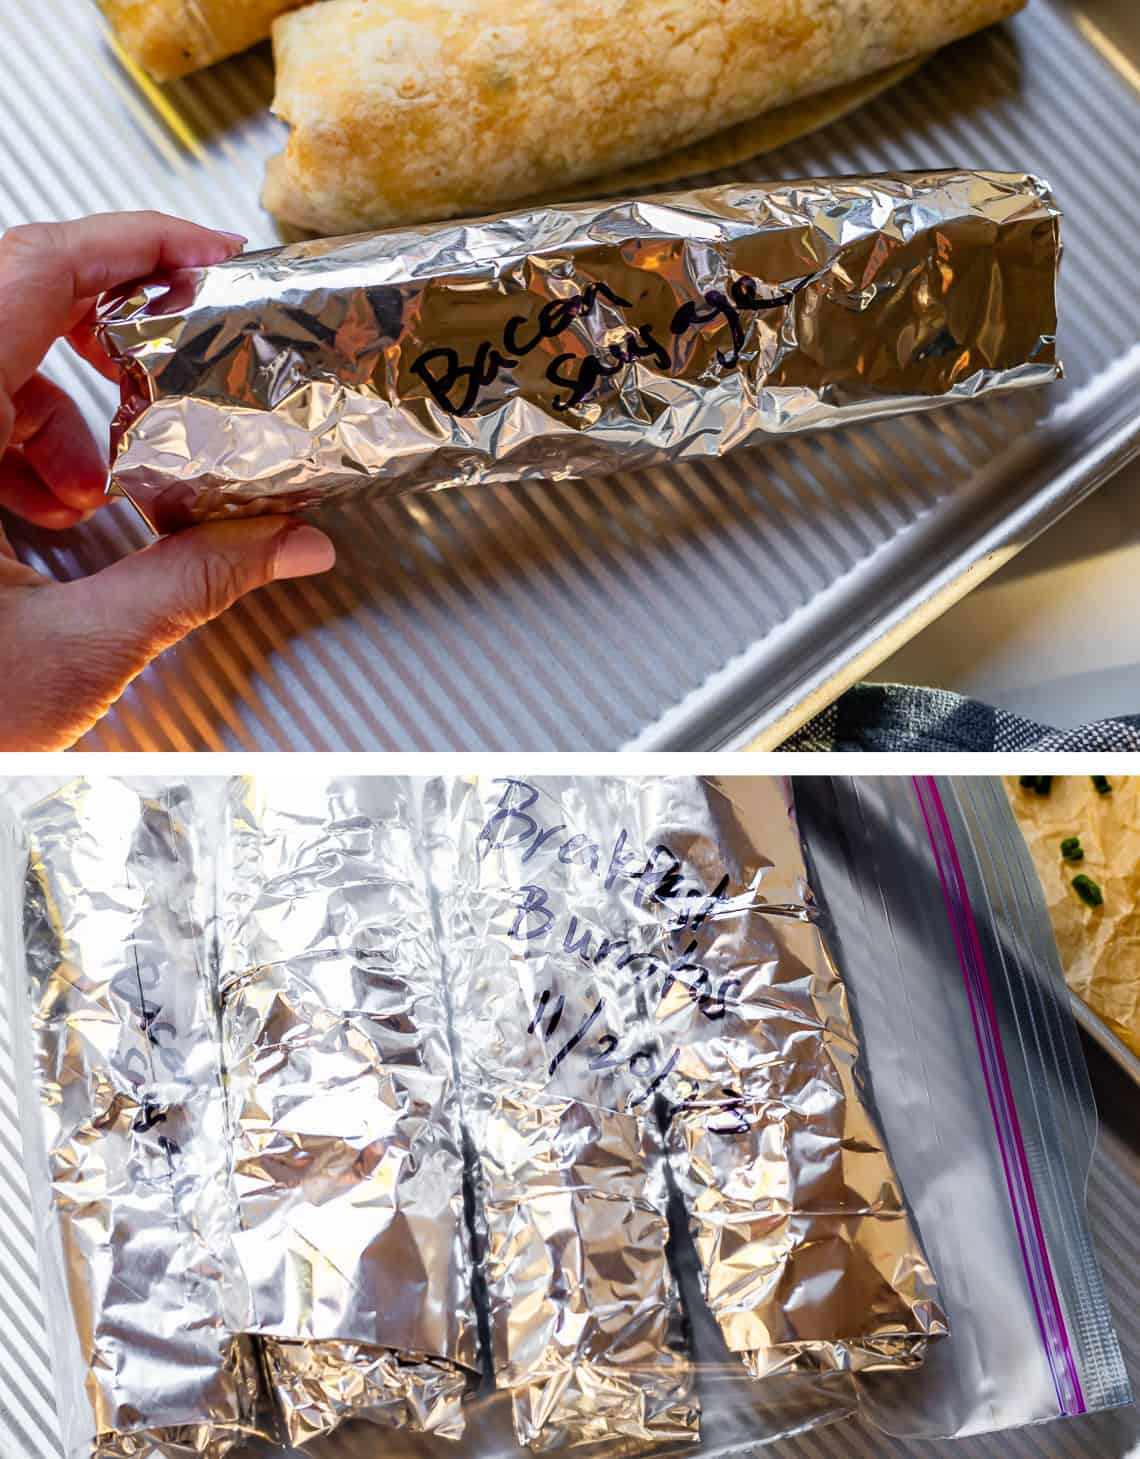 Wrapped breakfast burritos in foil ready to be frozen in ziploc bag.